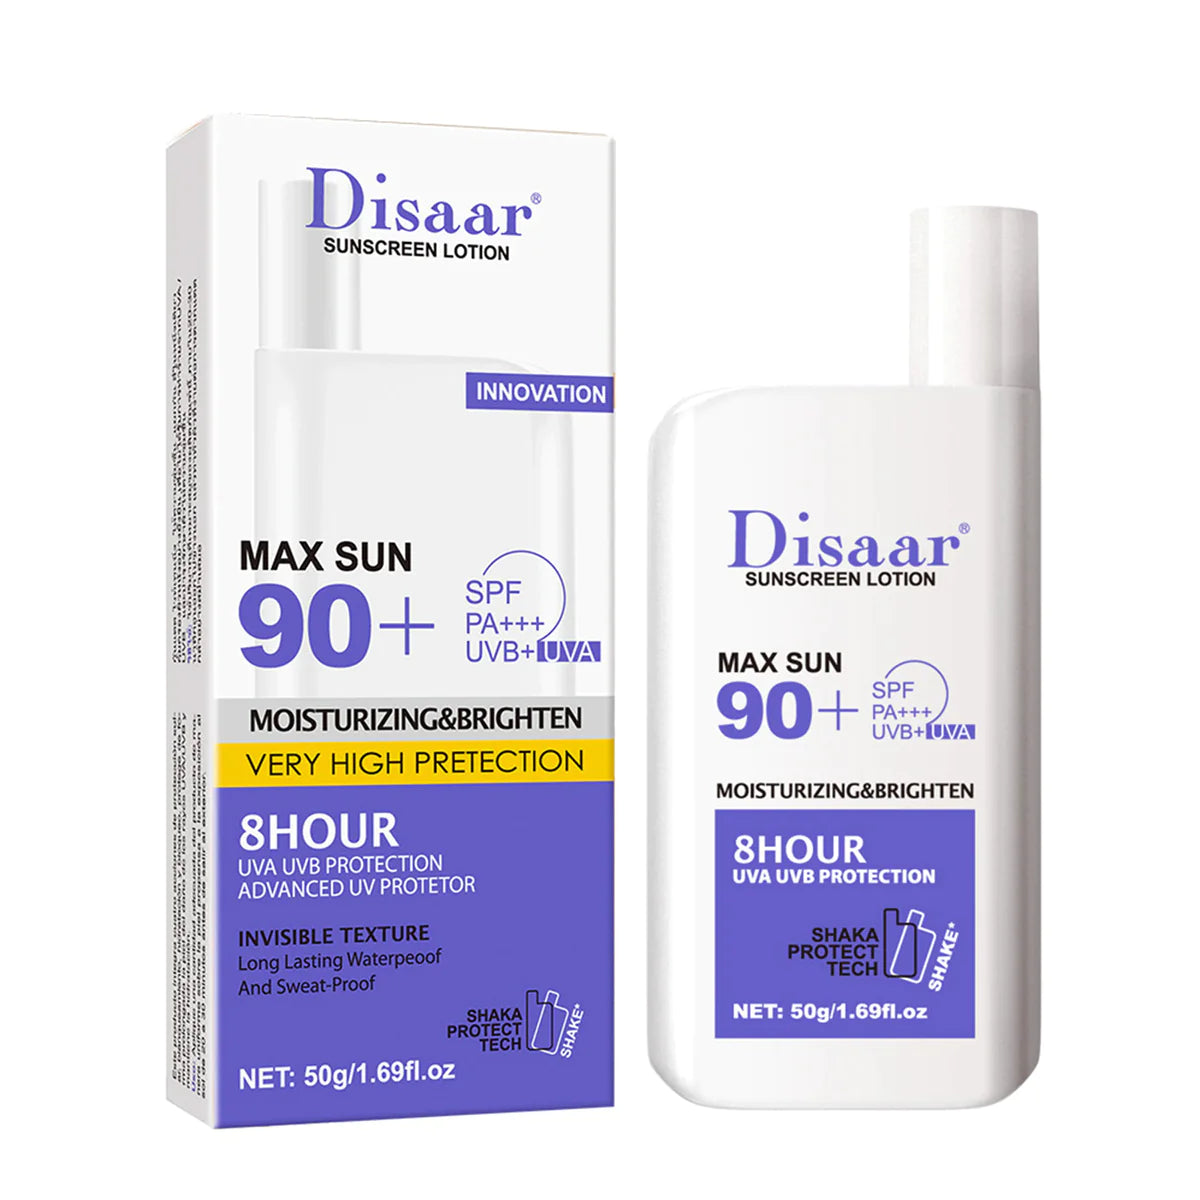 Disaar Sunscreen Lotion Max Sun 90+ 50g